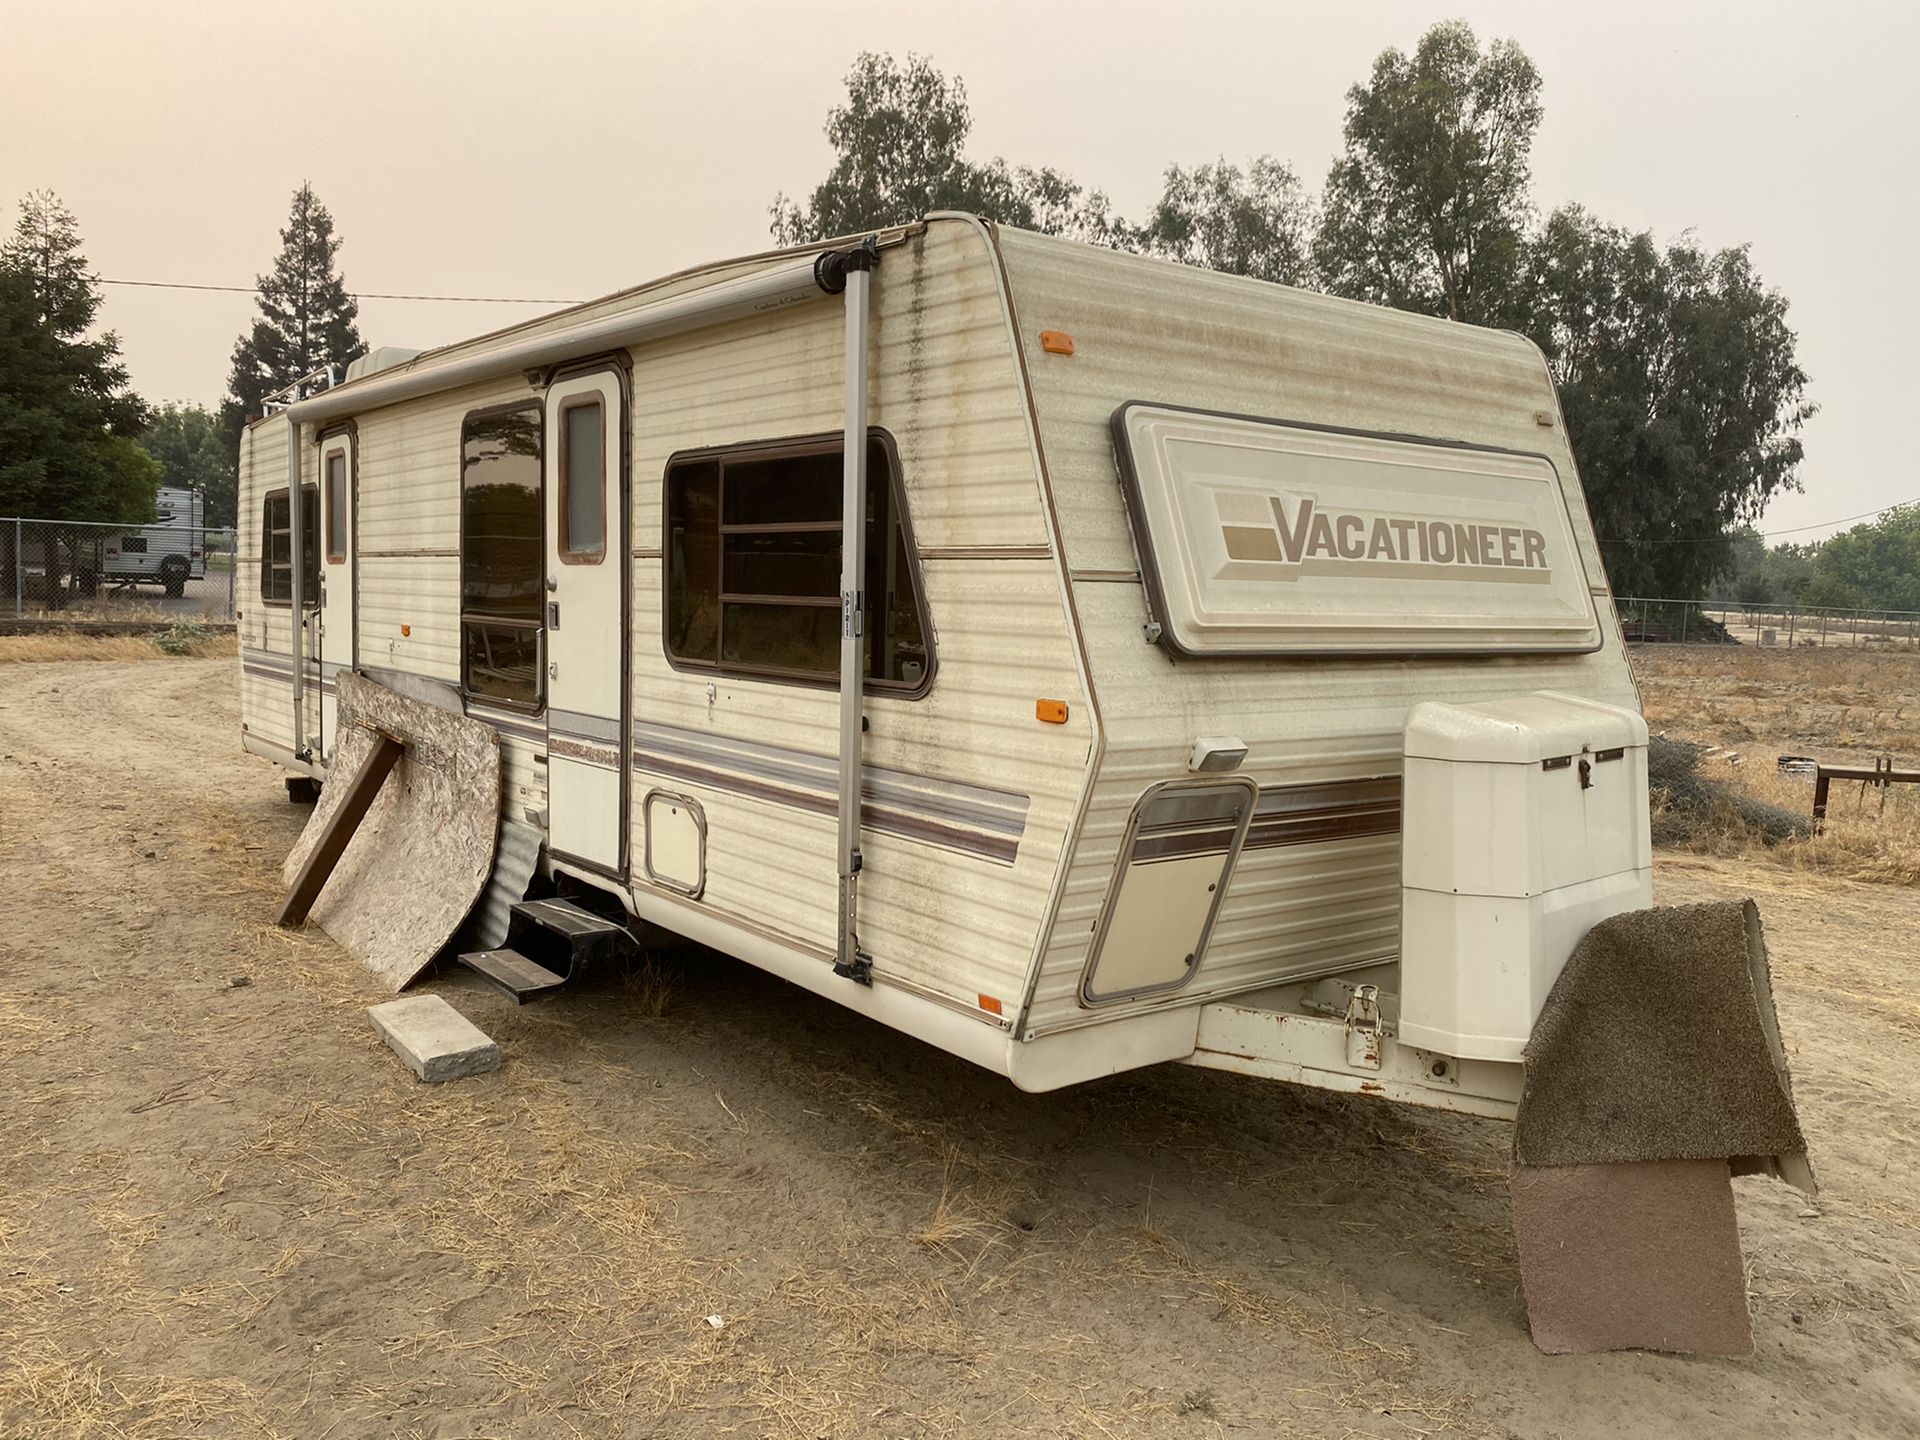 Vacationer camper trailer